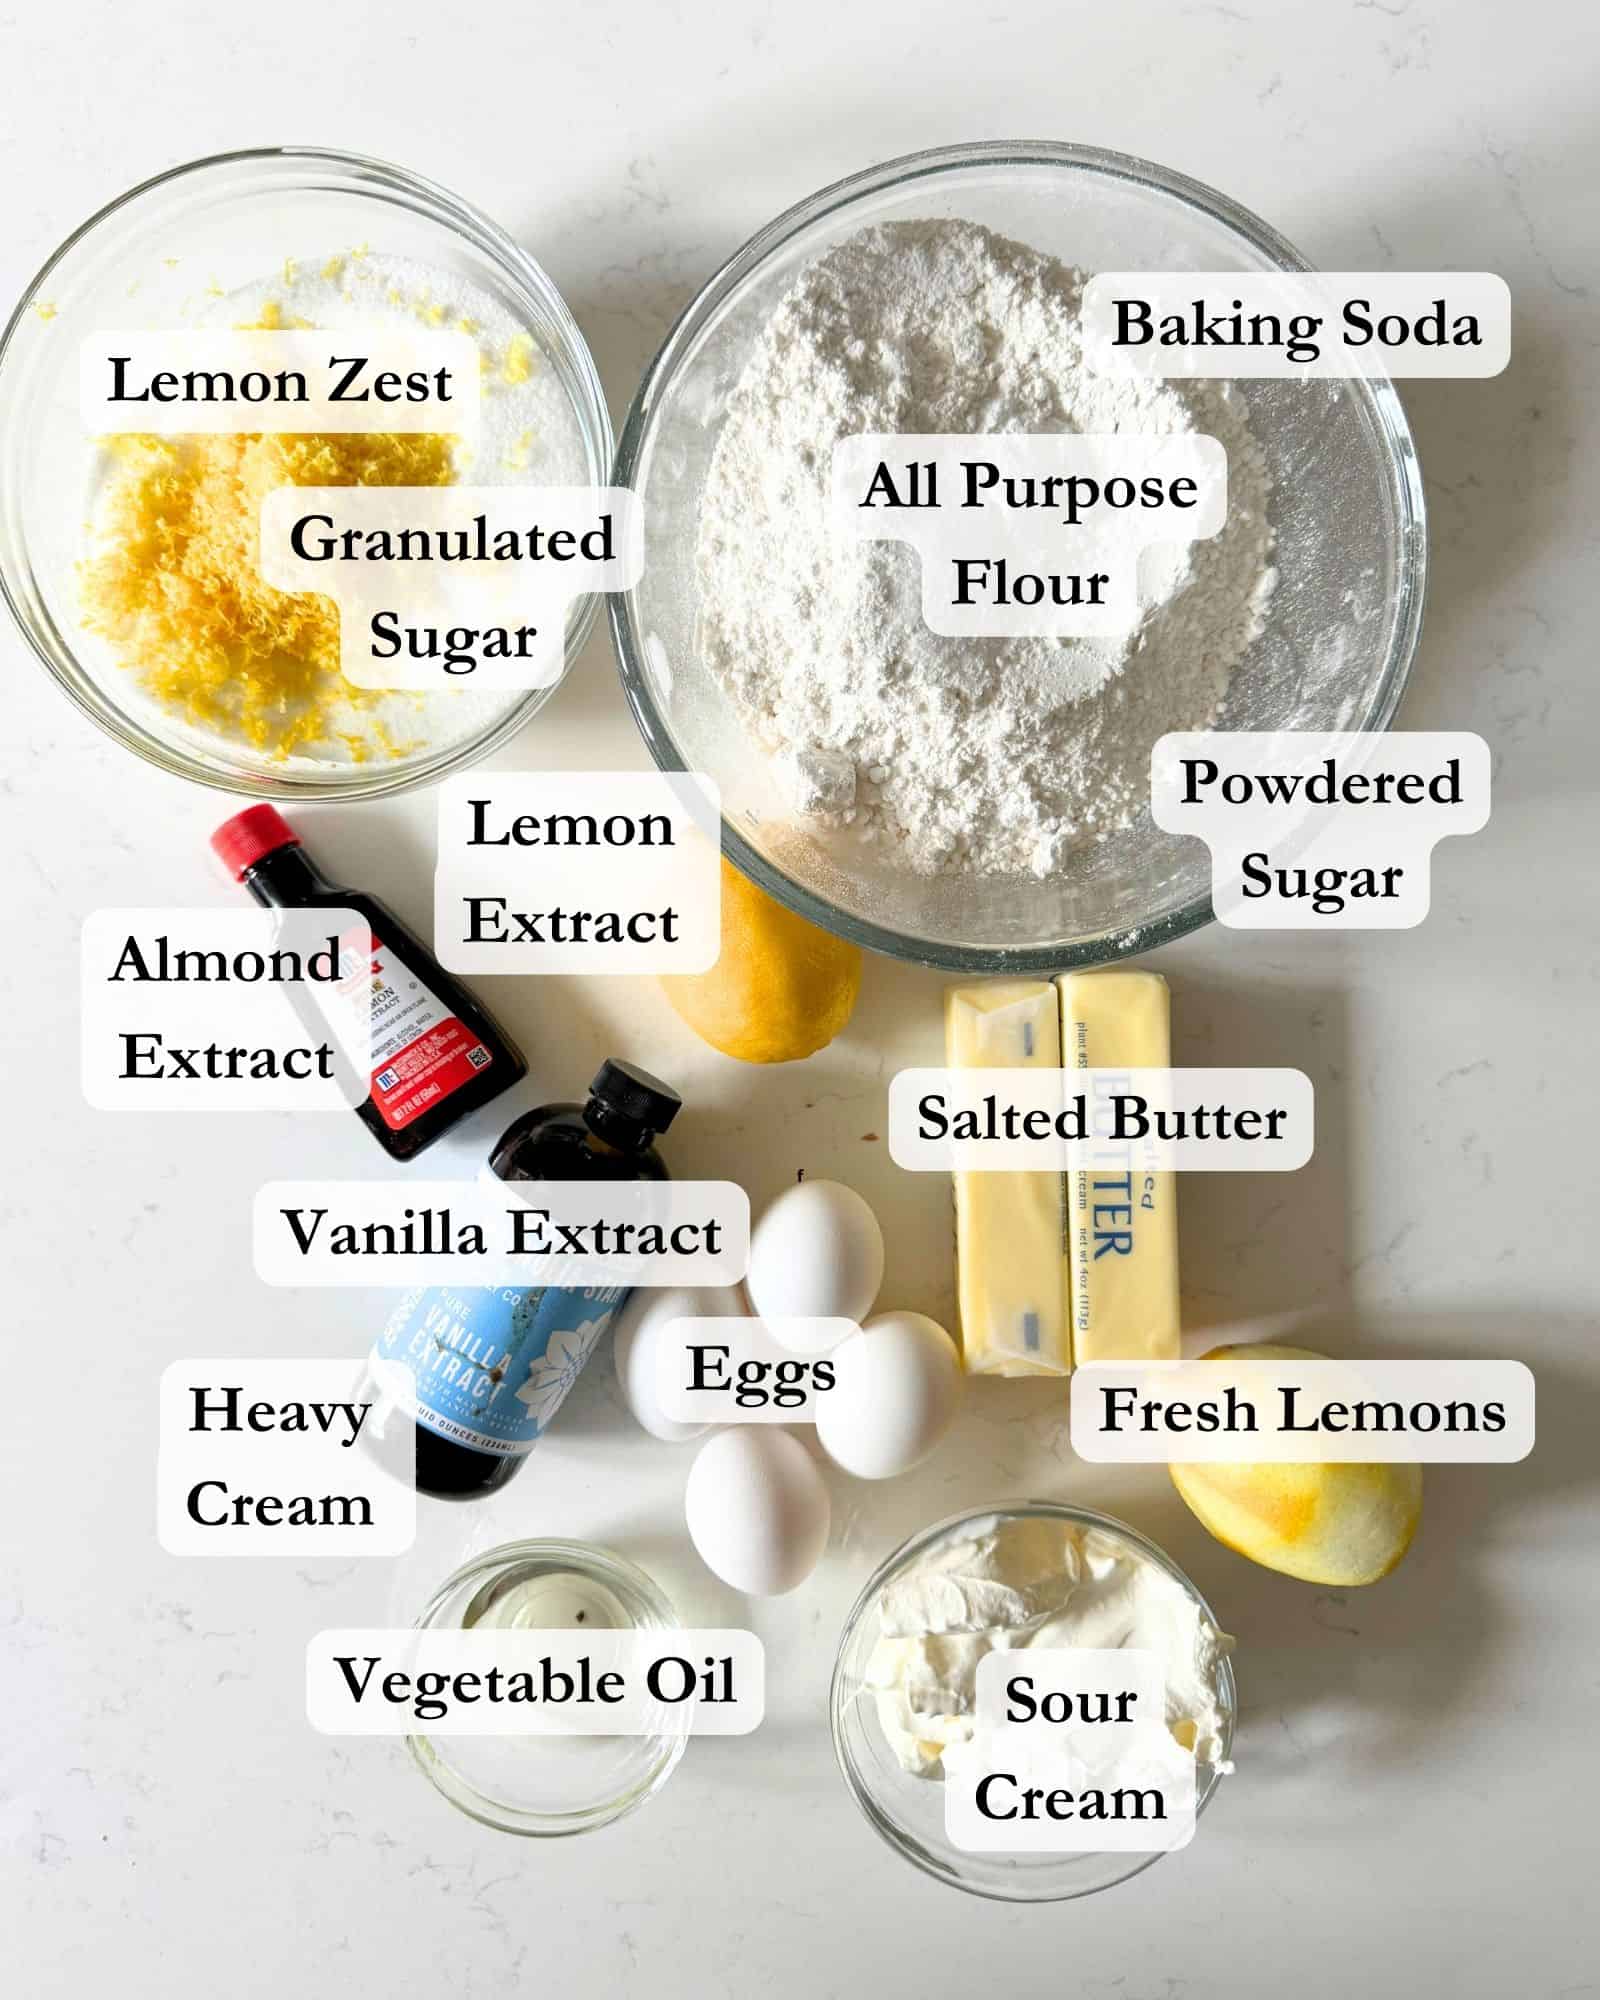 lemon pound cake and lemon glaze ingredients on a white surface - cake flour, butter, sugar, lemon zest, lemons, lemon extract, vanilla extract, almond extract, baking soda, kosher salt, sour cream, powdered sugar, heavy cream, and vegetable oil.